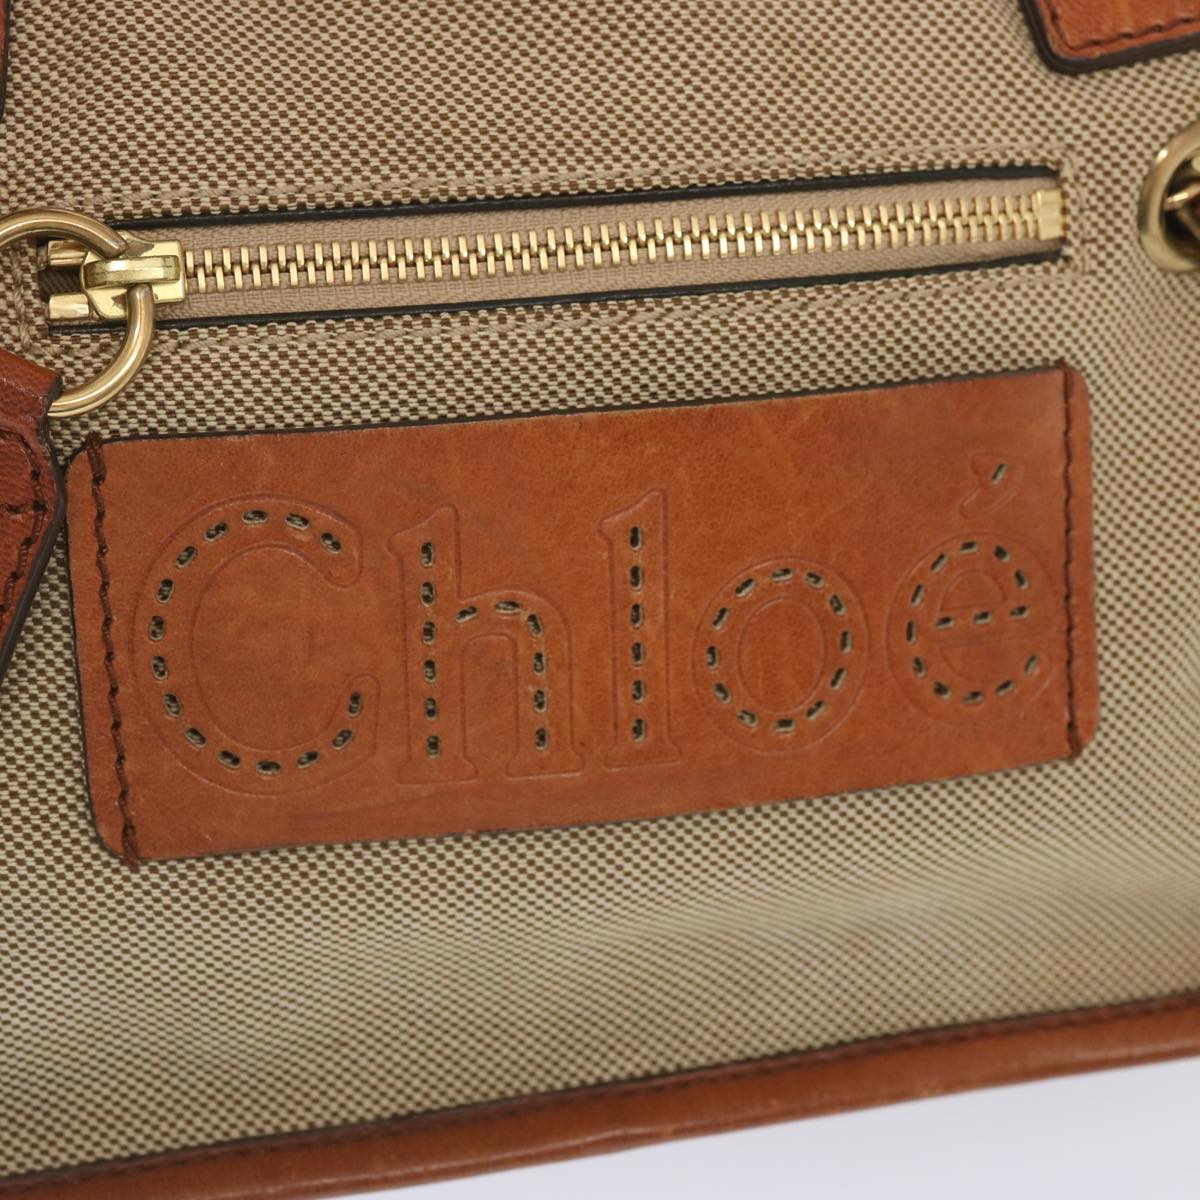 Chloe Harley Shoulder Bag Canvas Leather Beige Brown Auth 67671